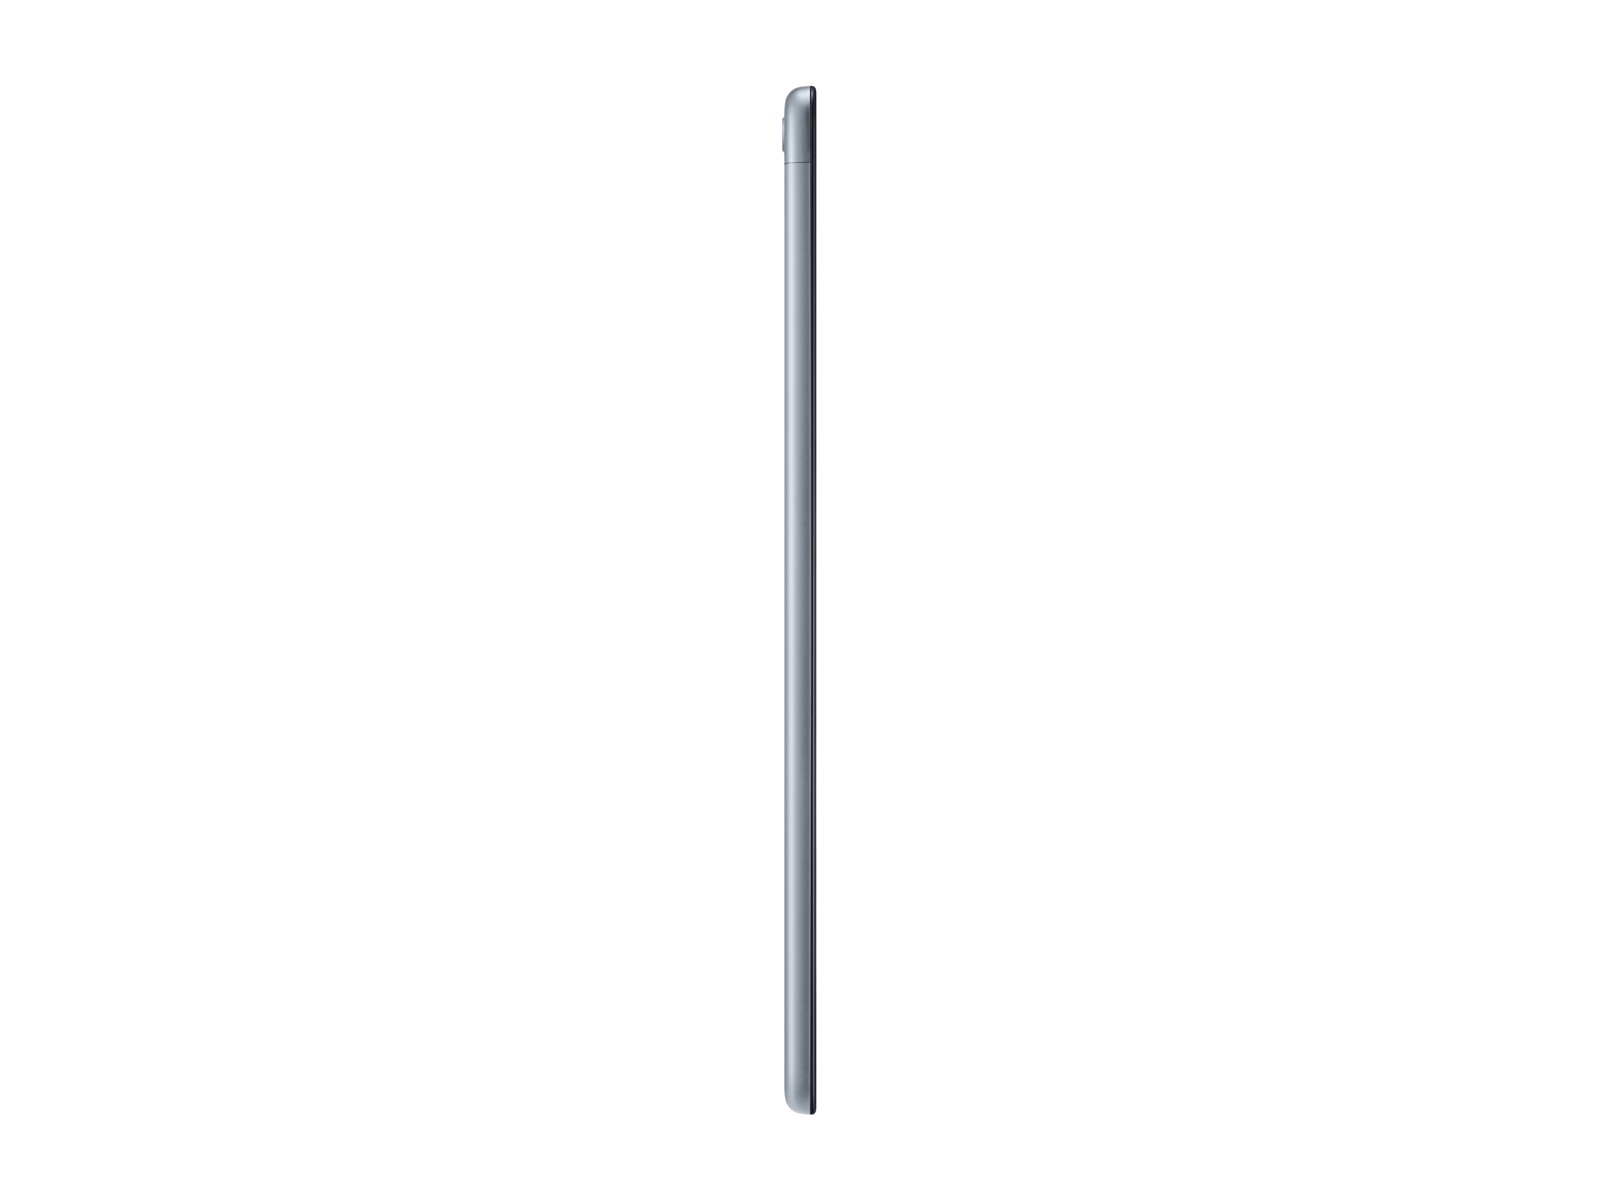 Thumbnail image of Galaxy Tab A 10.1 (2019), 64GB, Silver (Wi-Fi)